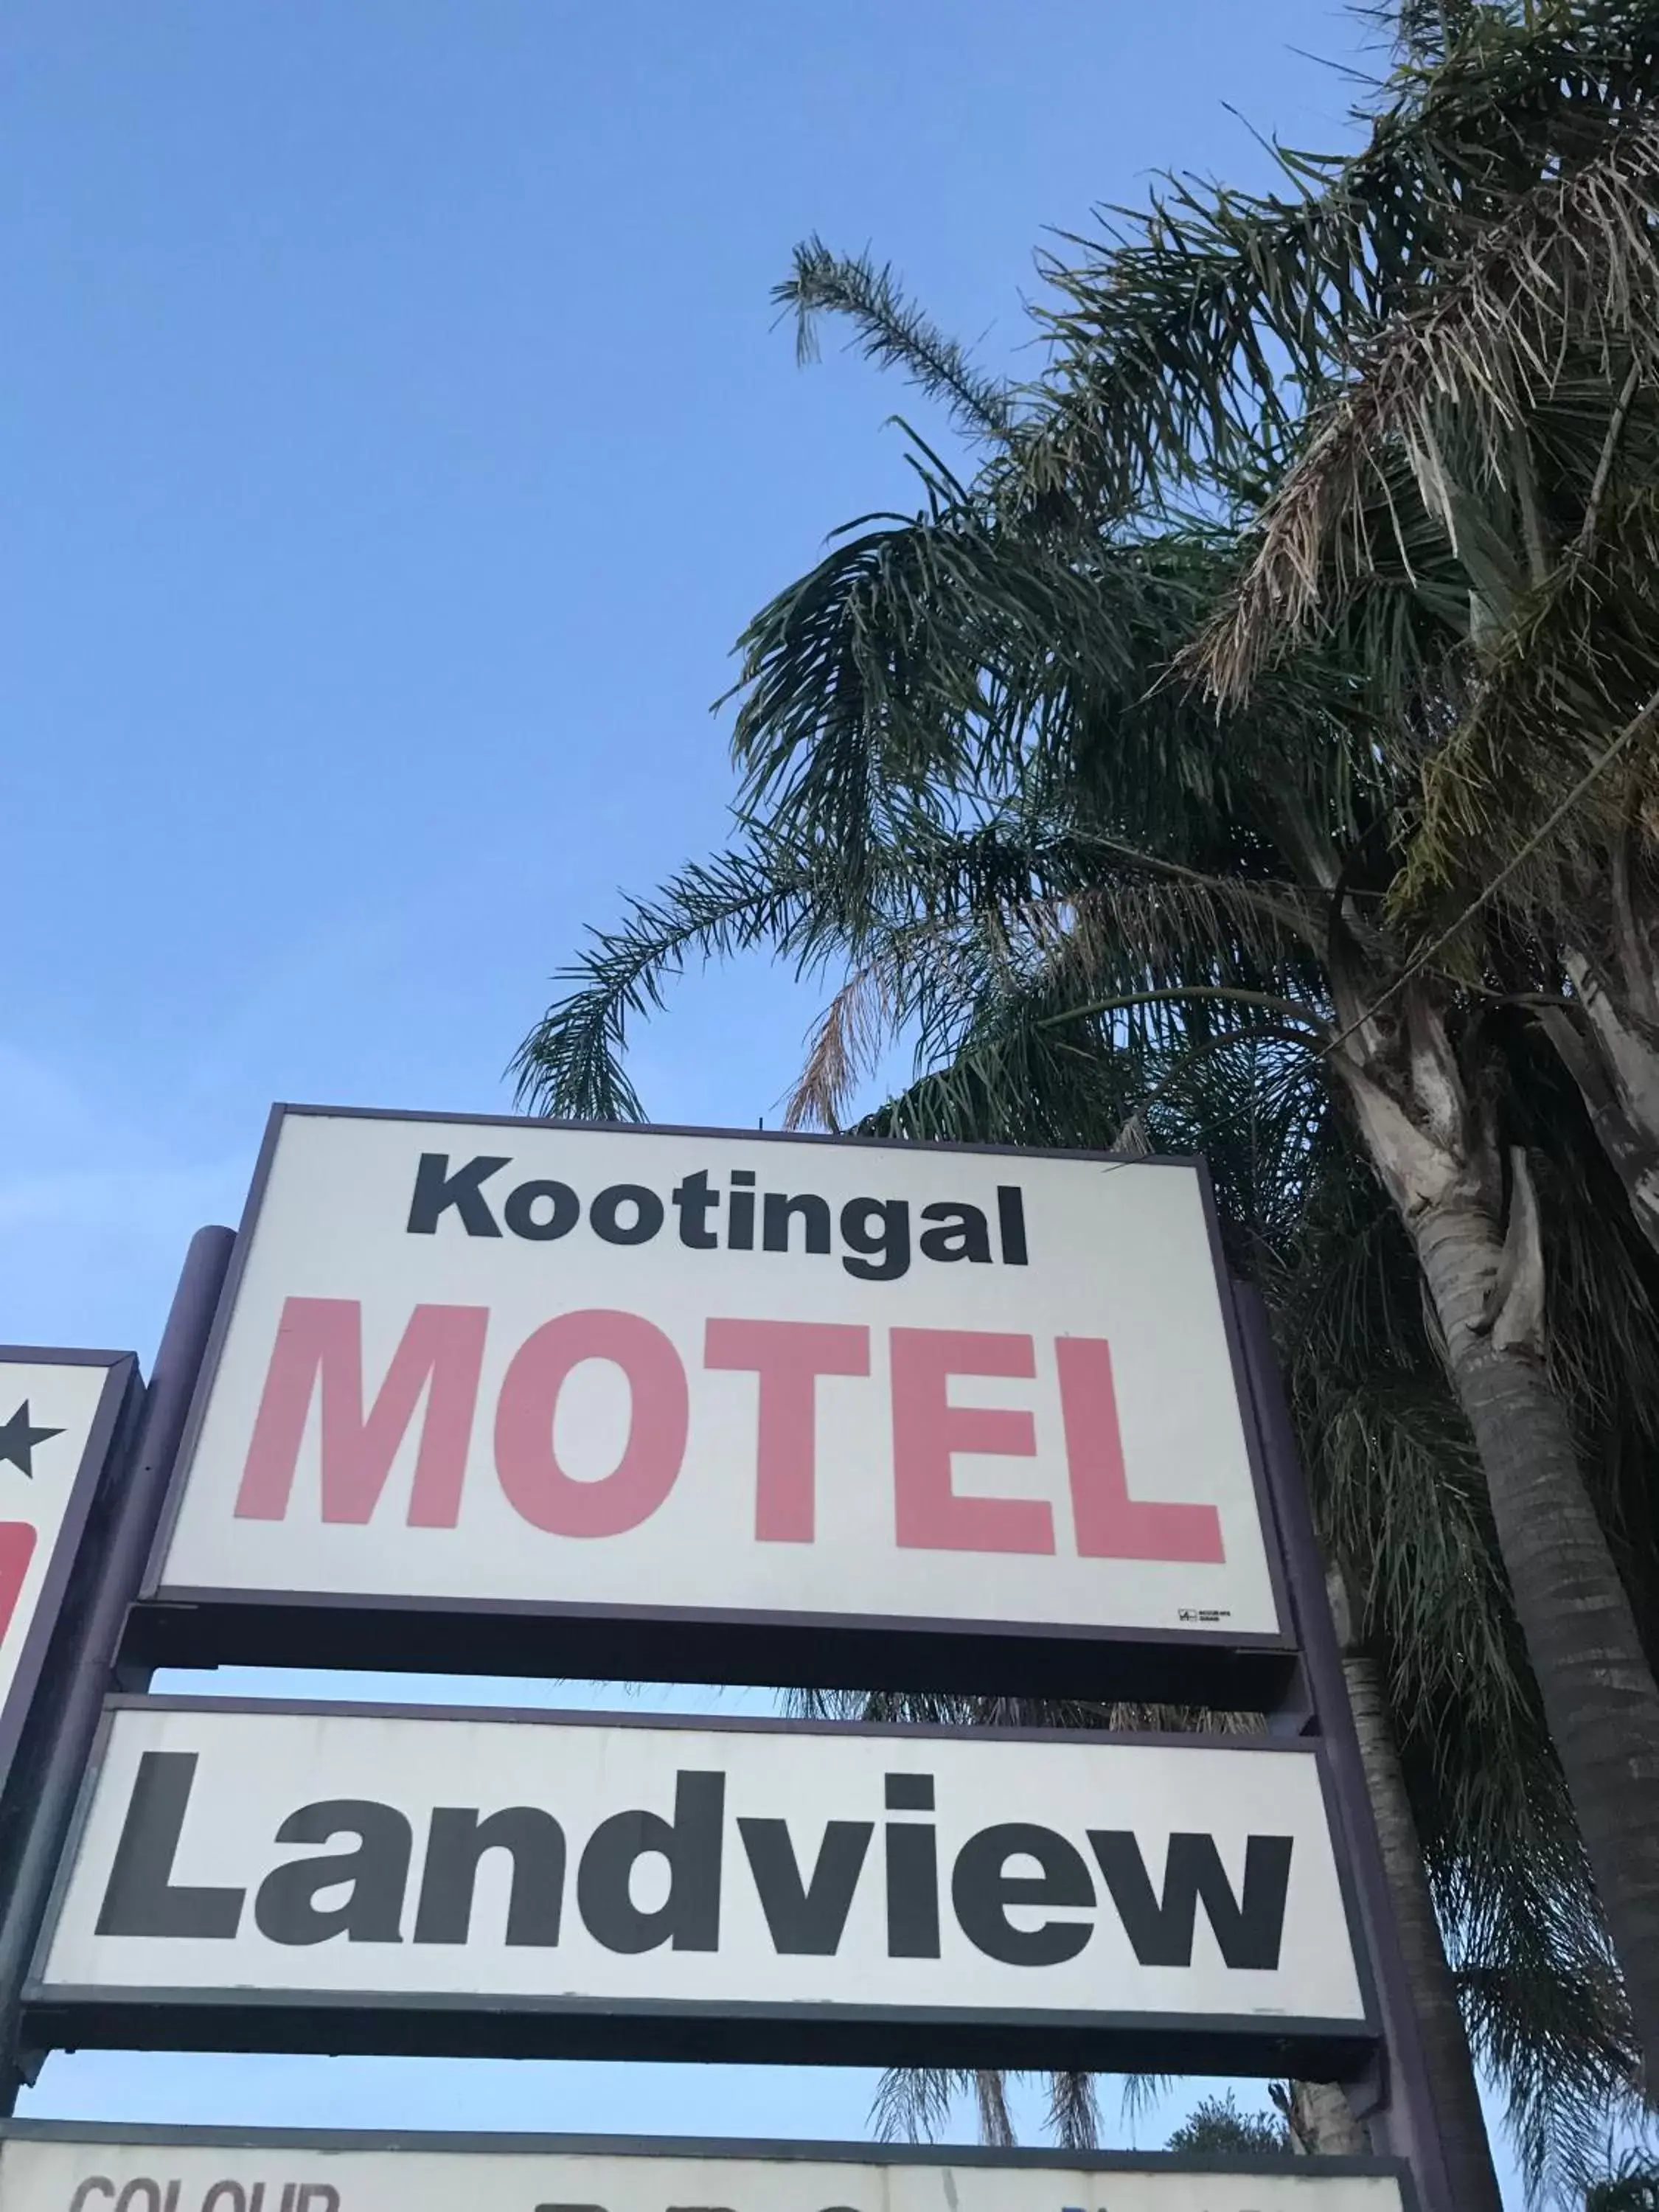 Property logo or sign in Kootingal Landview Motel